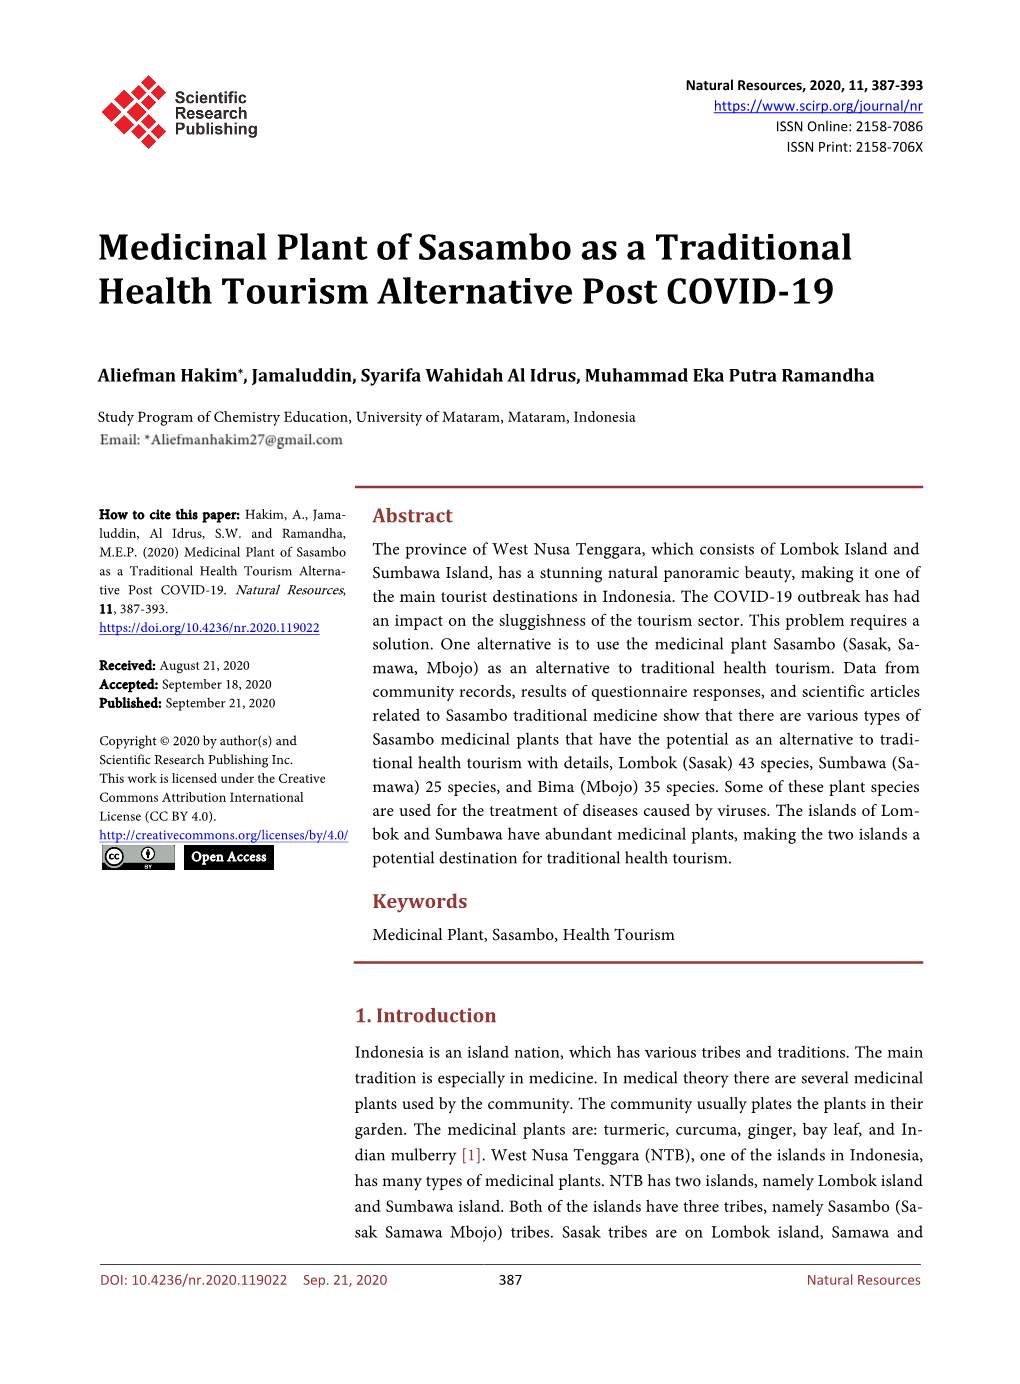 Medicinal Plant of Sasambo As a Traditional Health Tourism Alternative Post COVID-19